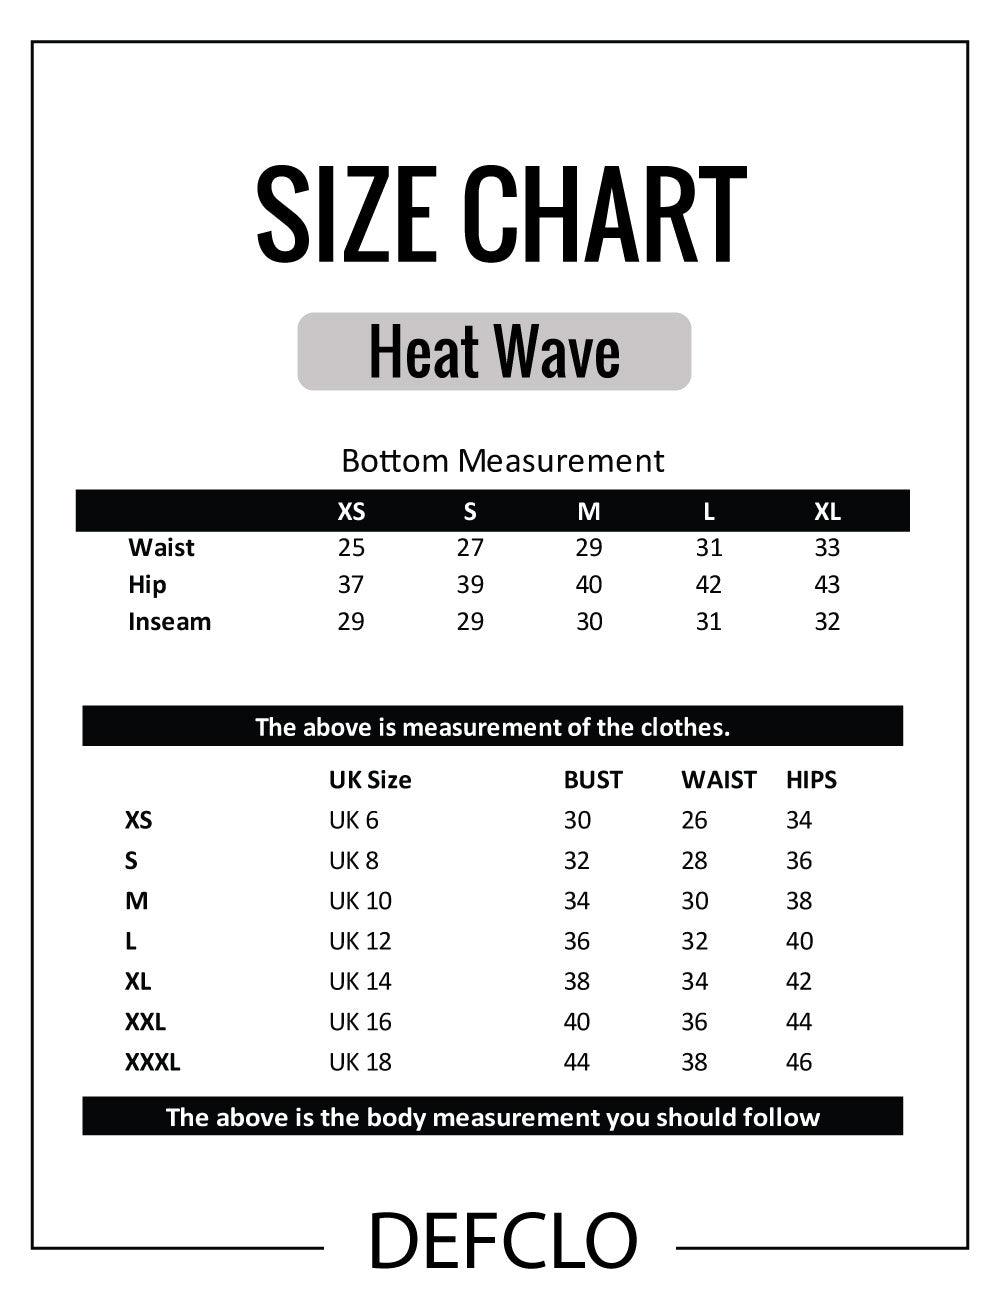 Heat Wave - Bottom